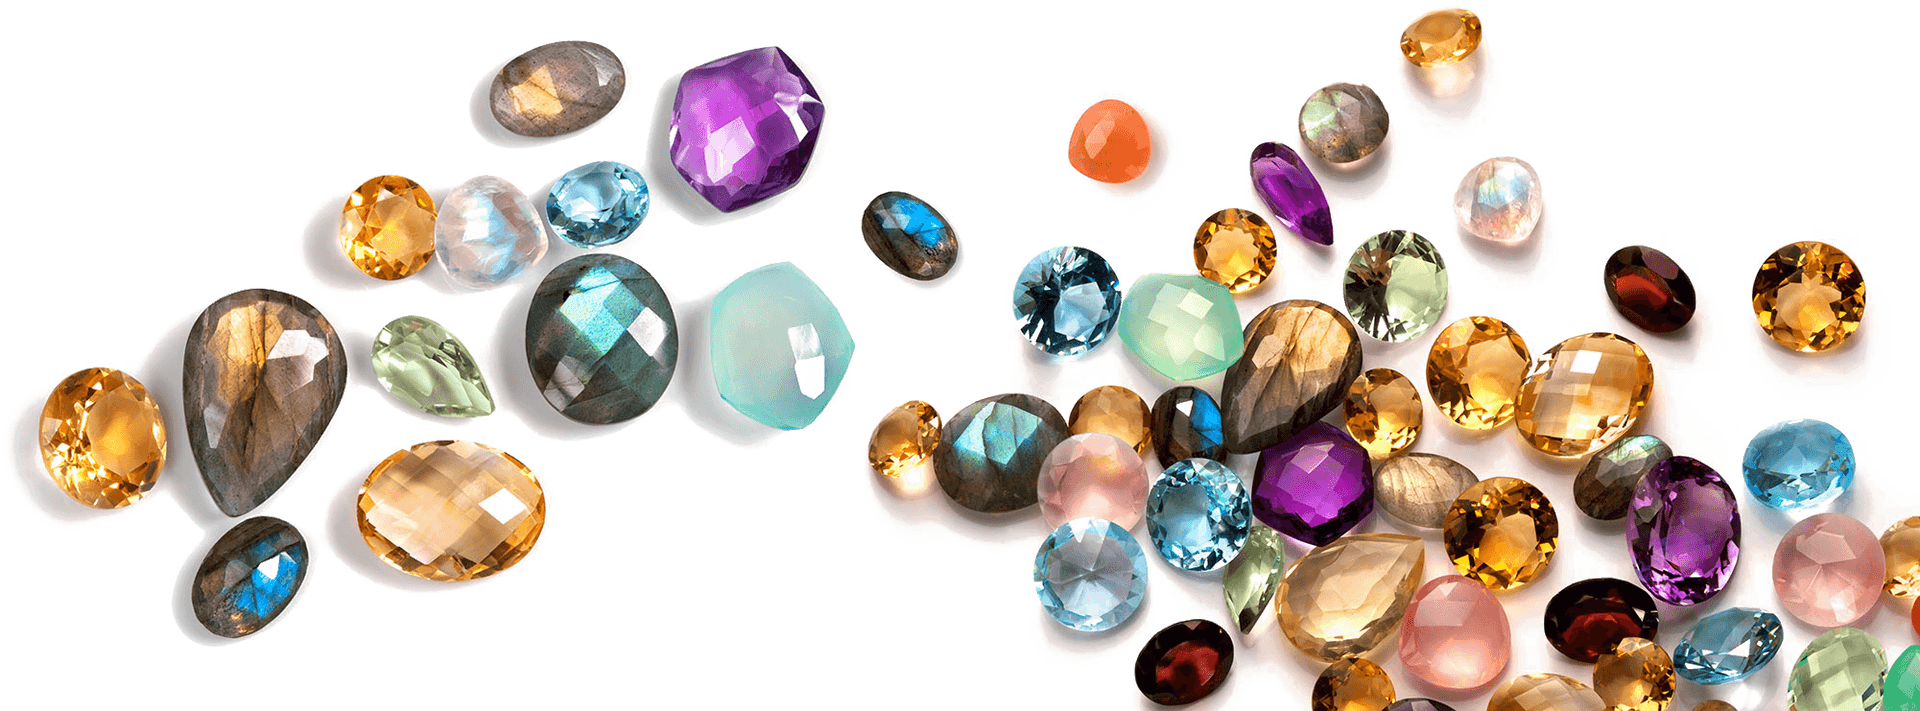 Assorted Precious Gemstones PNG image